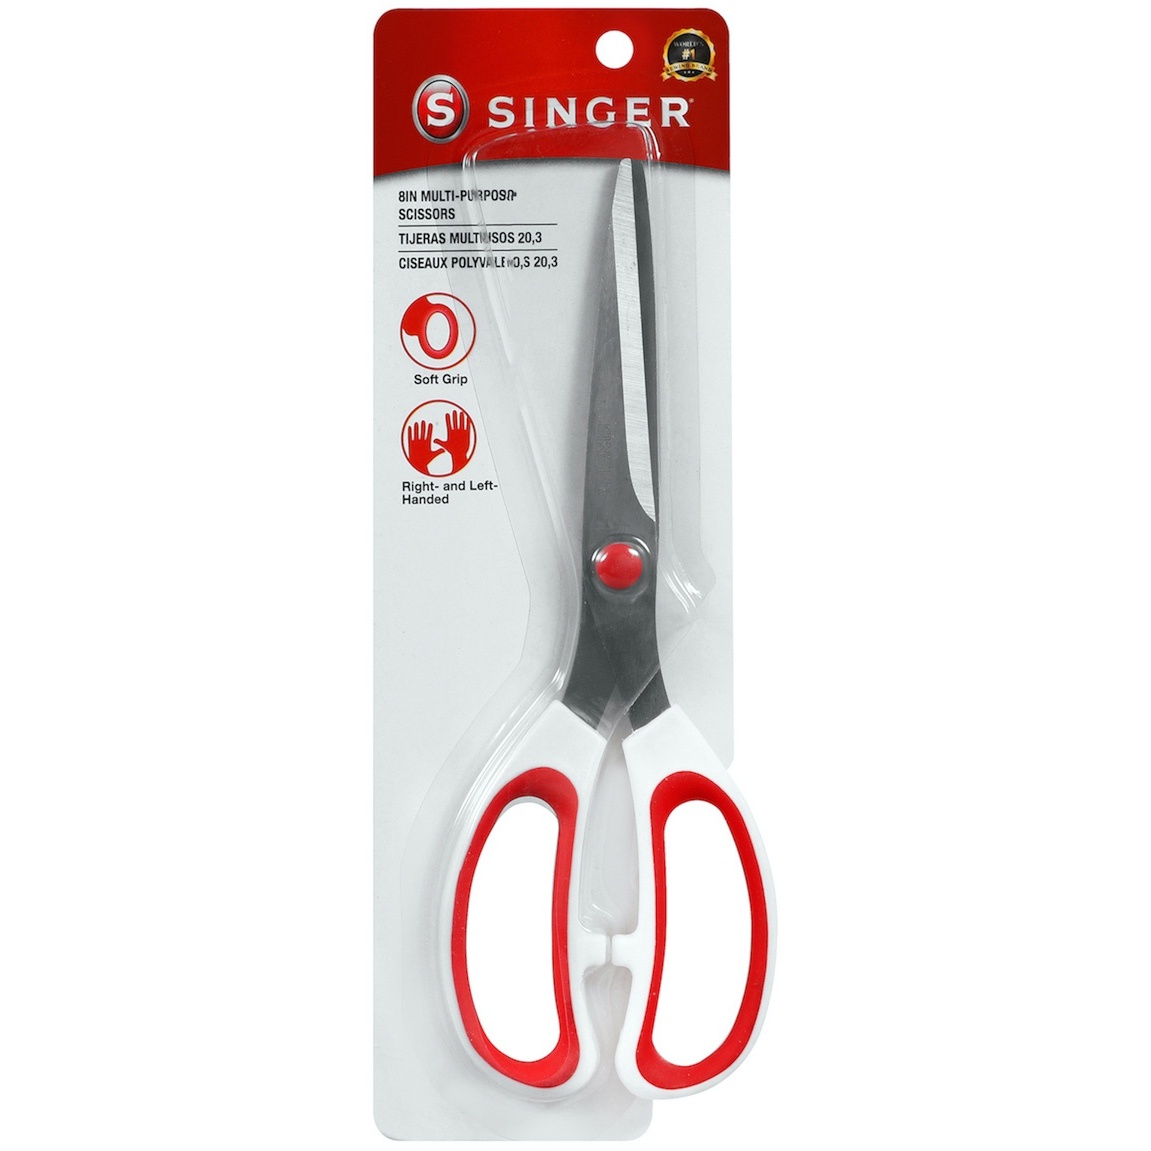 Singer Select Household All Purpose Scissors, Red/White, 8